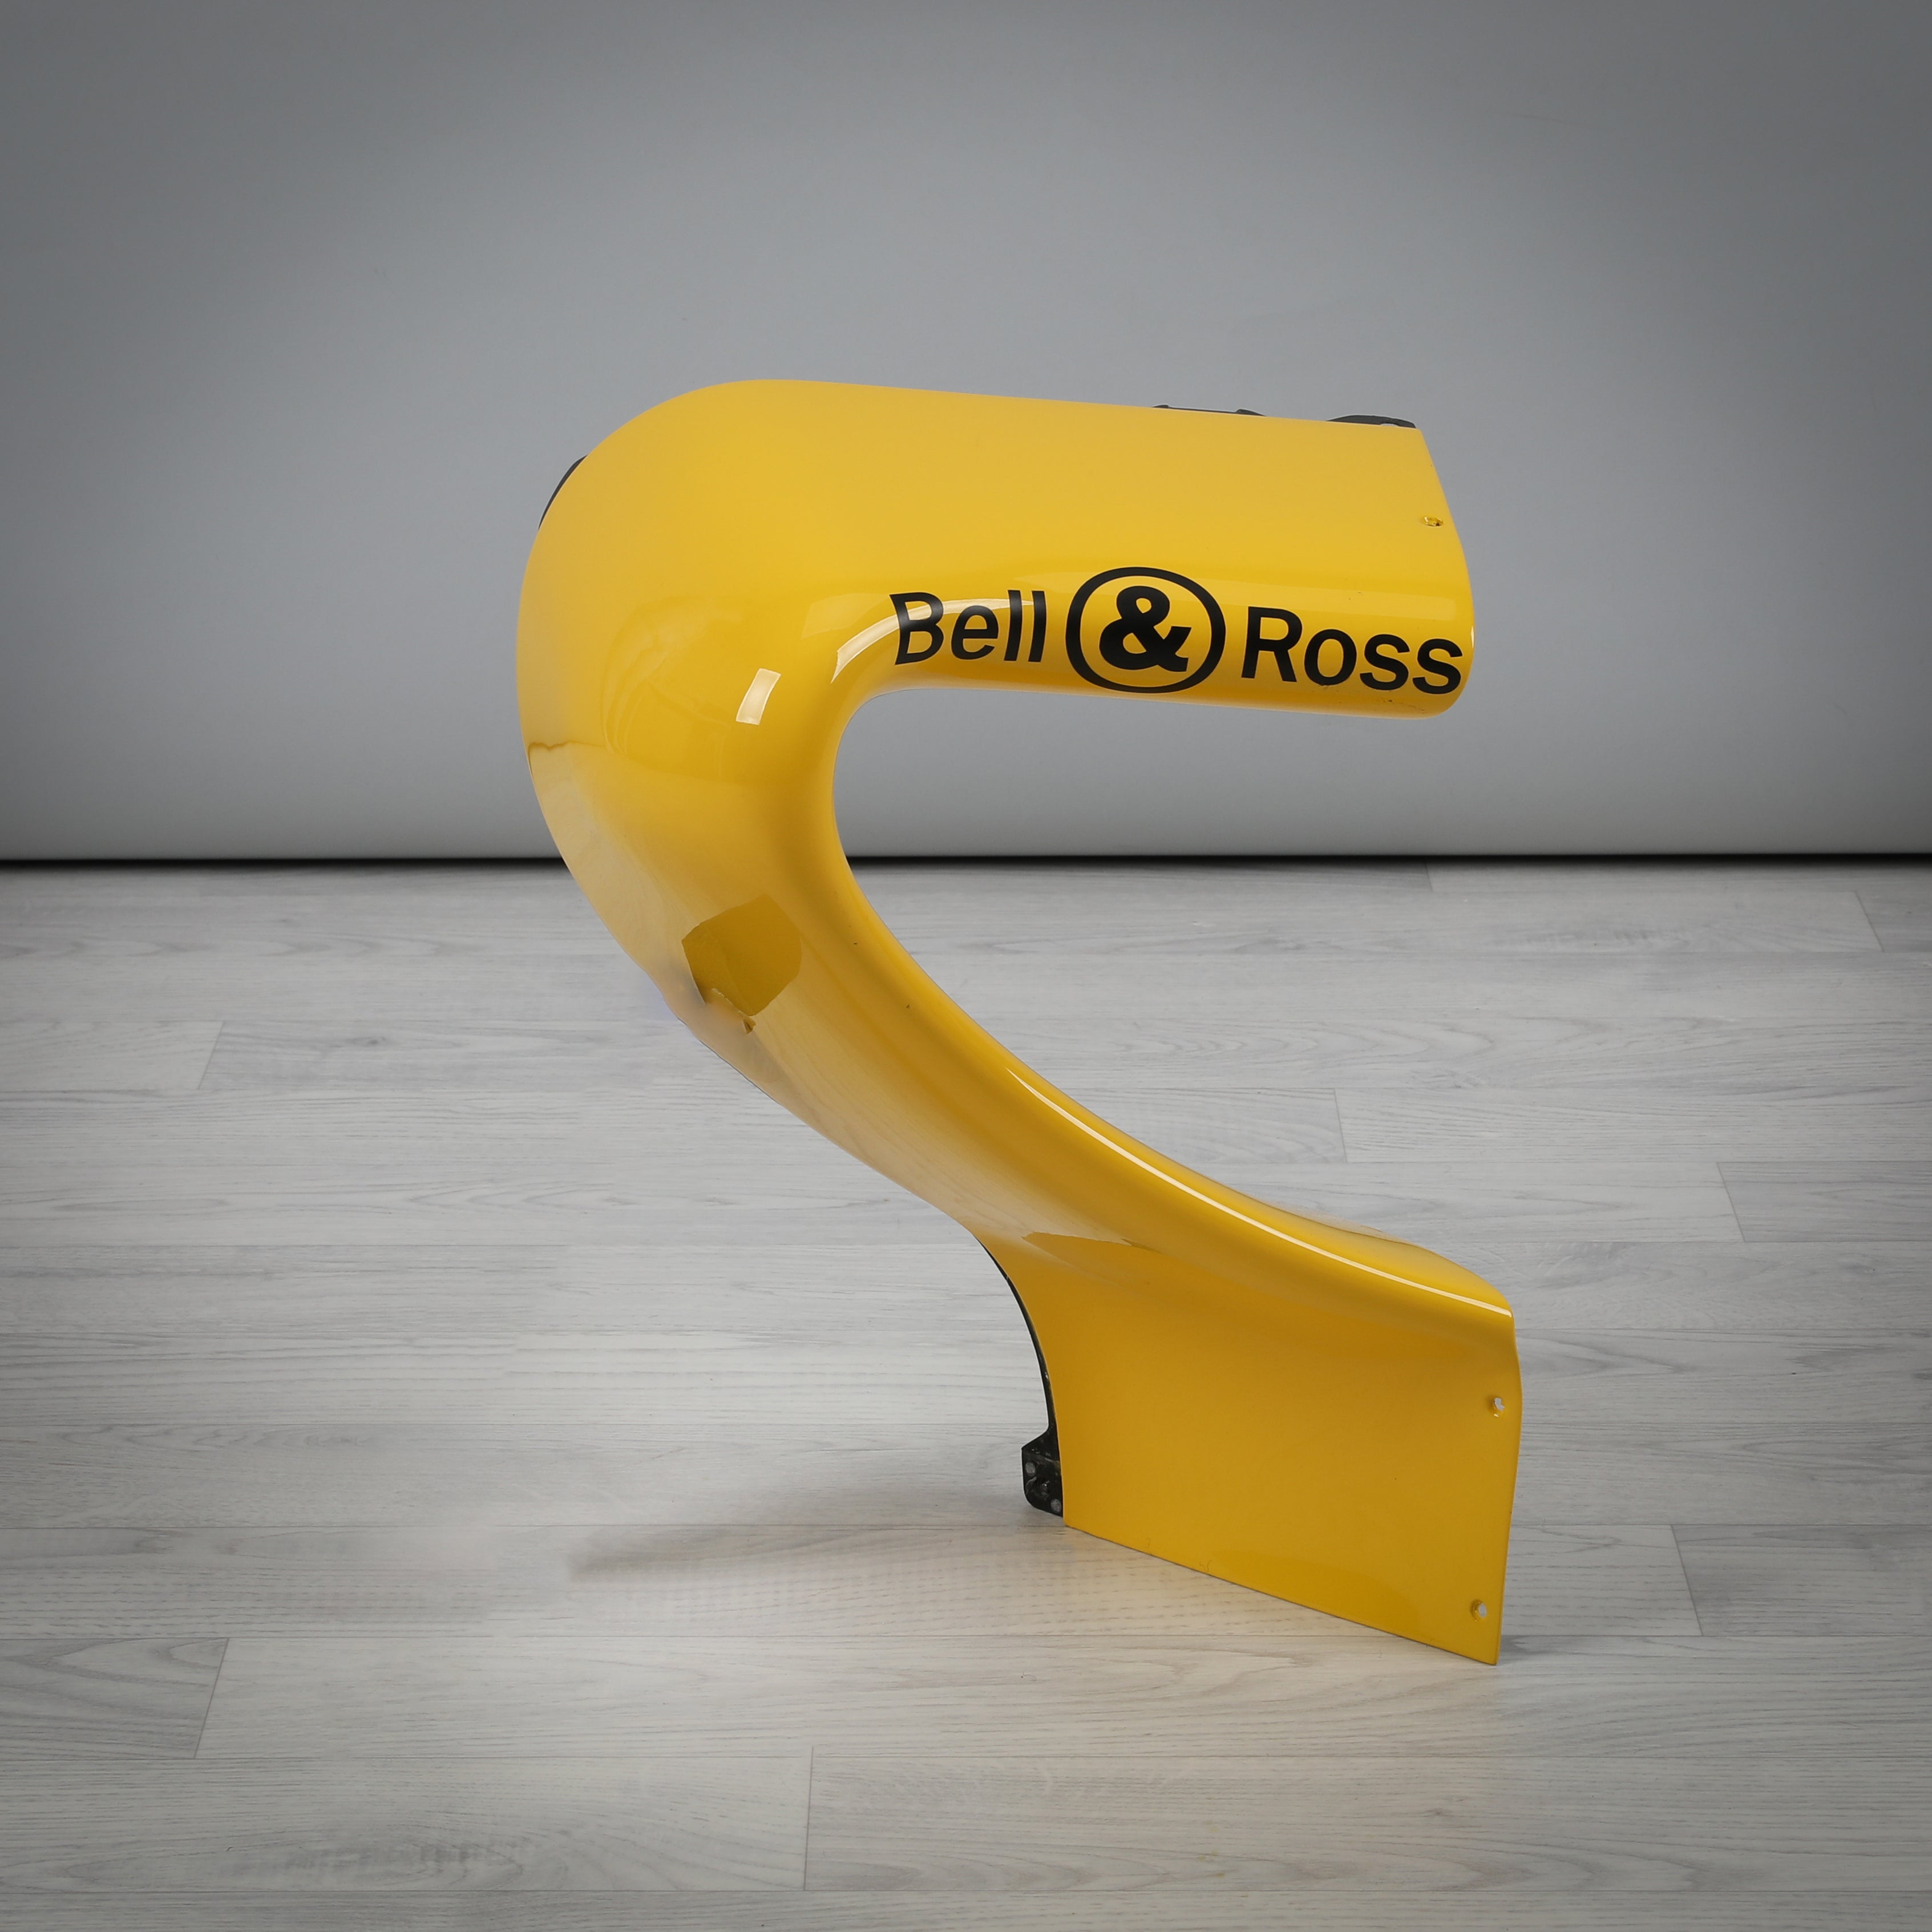 Renault 2016 Sidepod Leading Edge Bell and Ross Branding